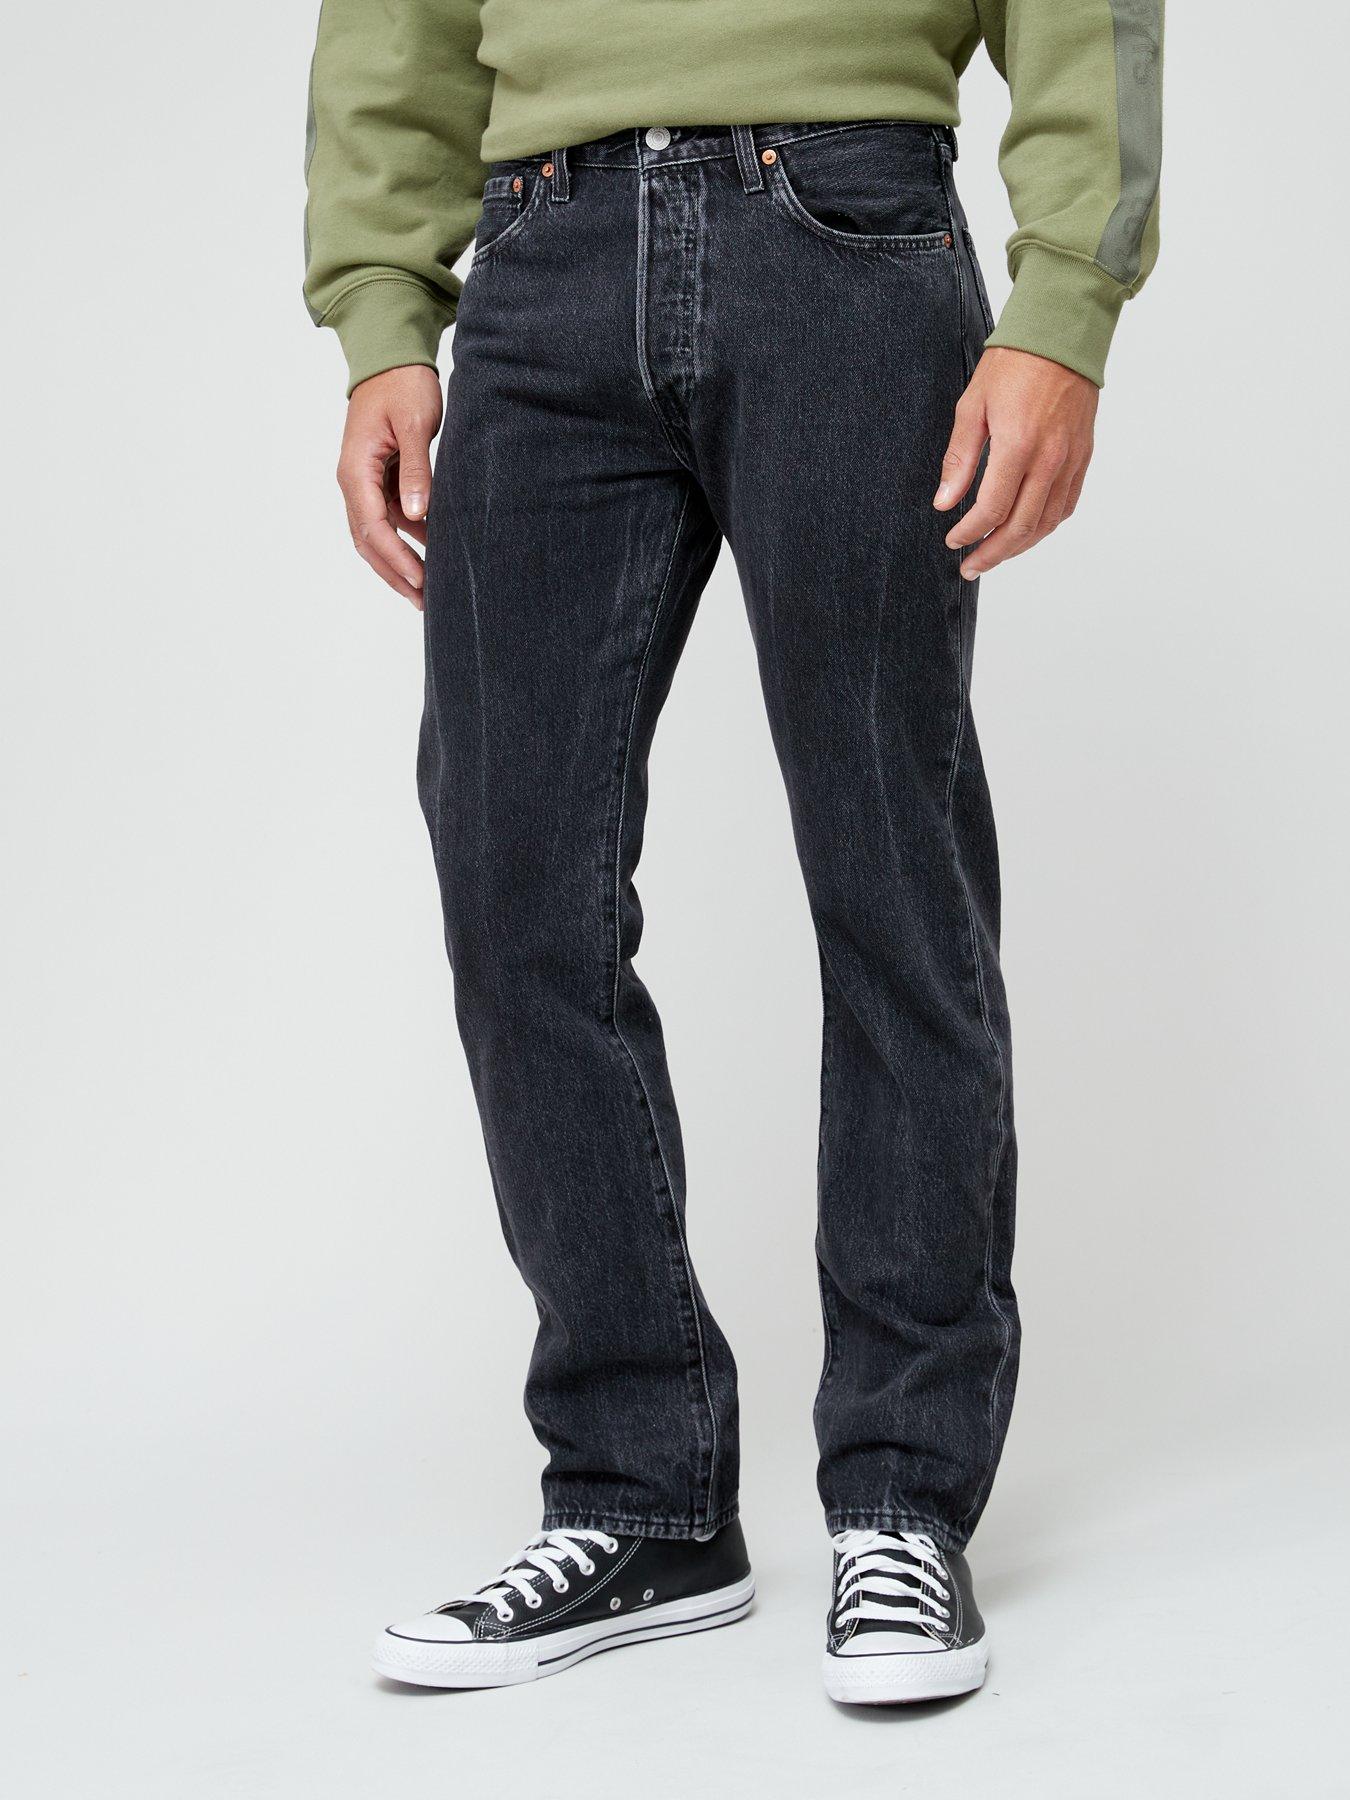 Men's Levi's 414 jeans dark wash size 30 blue